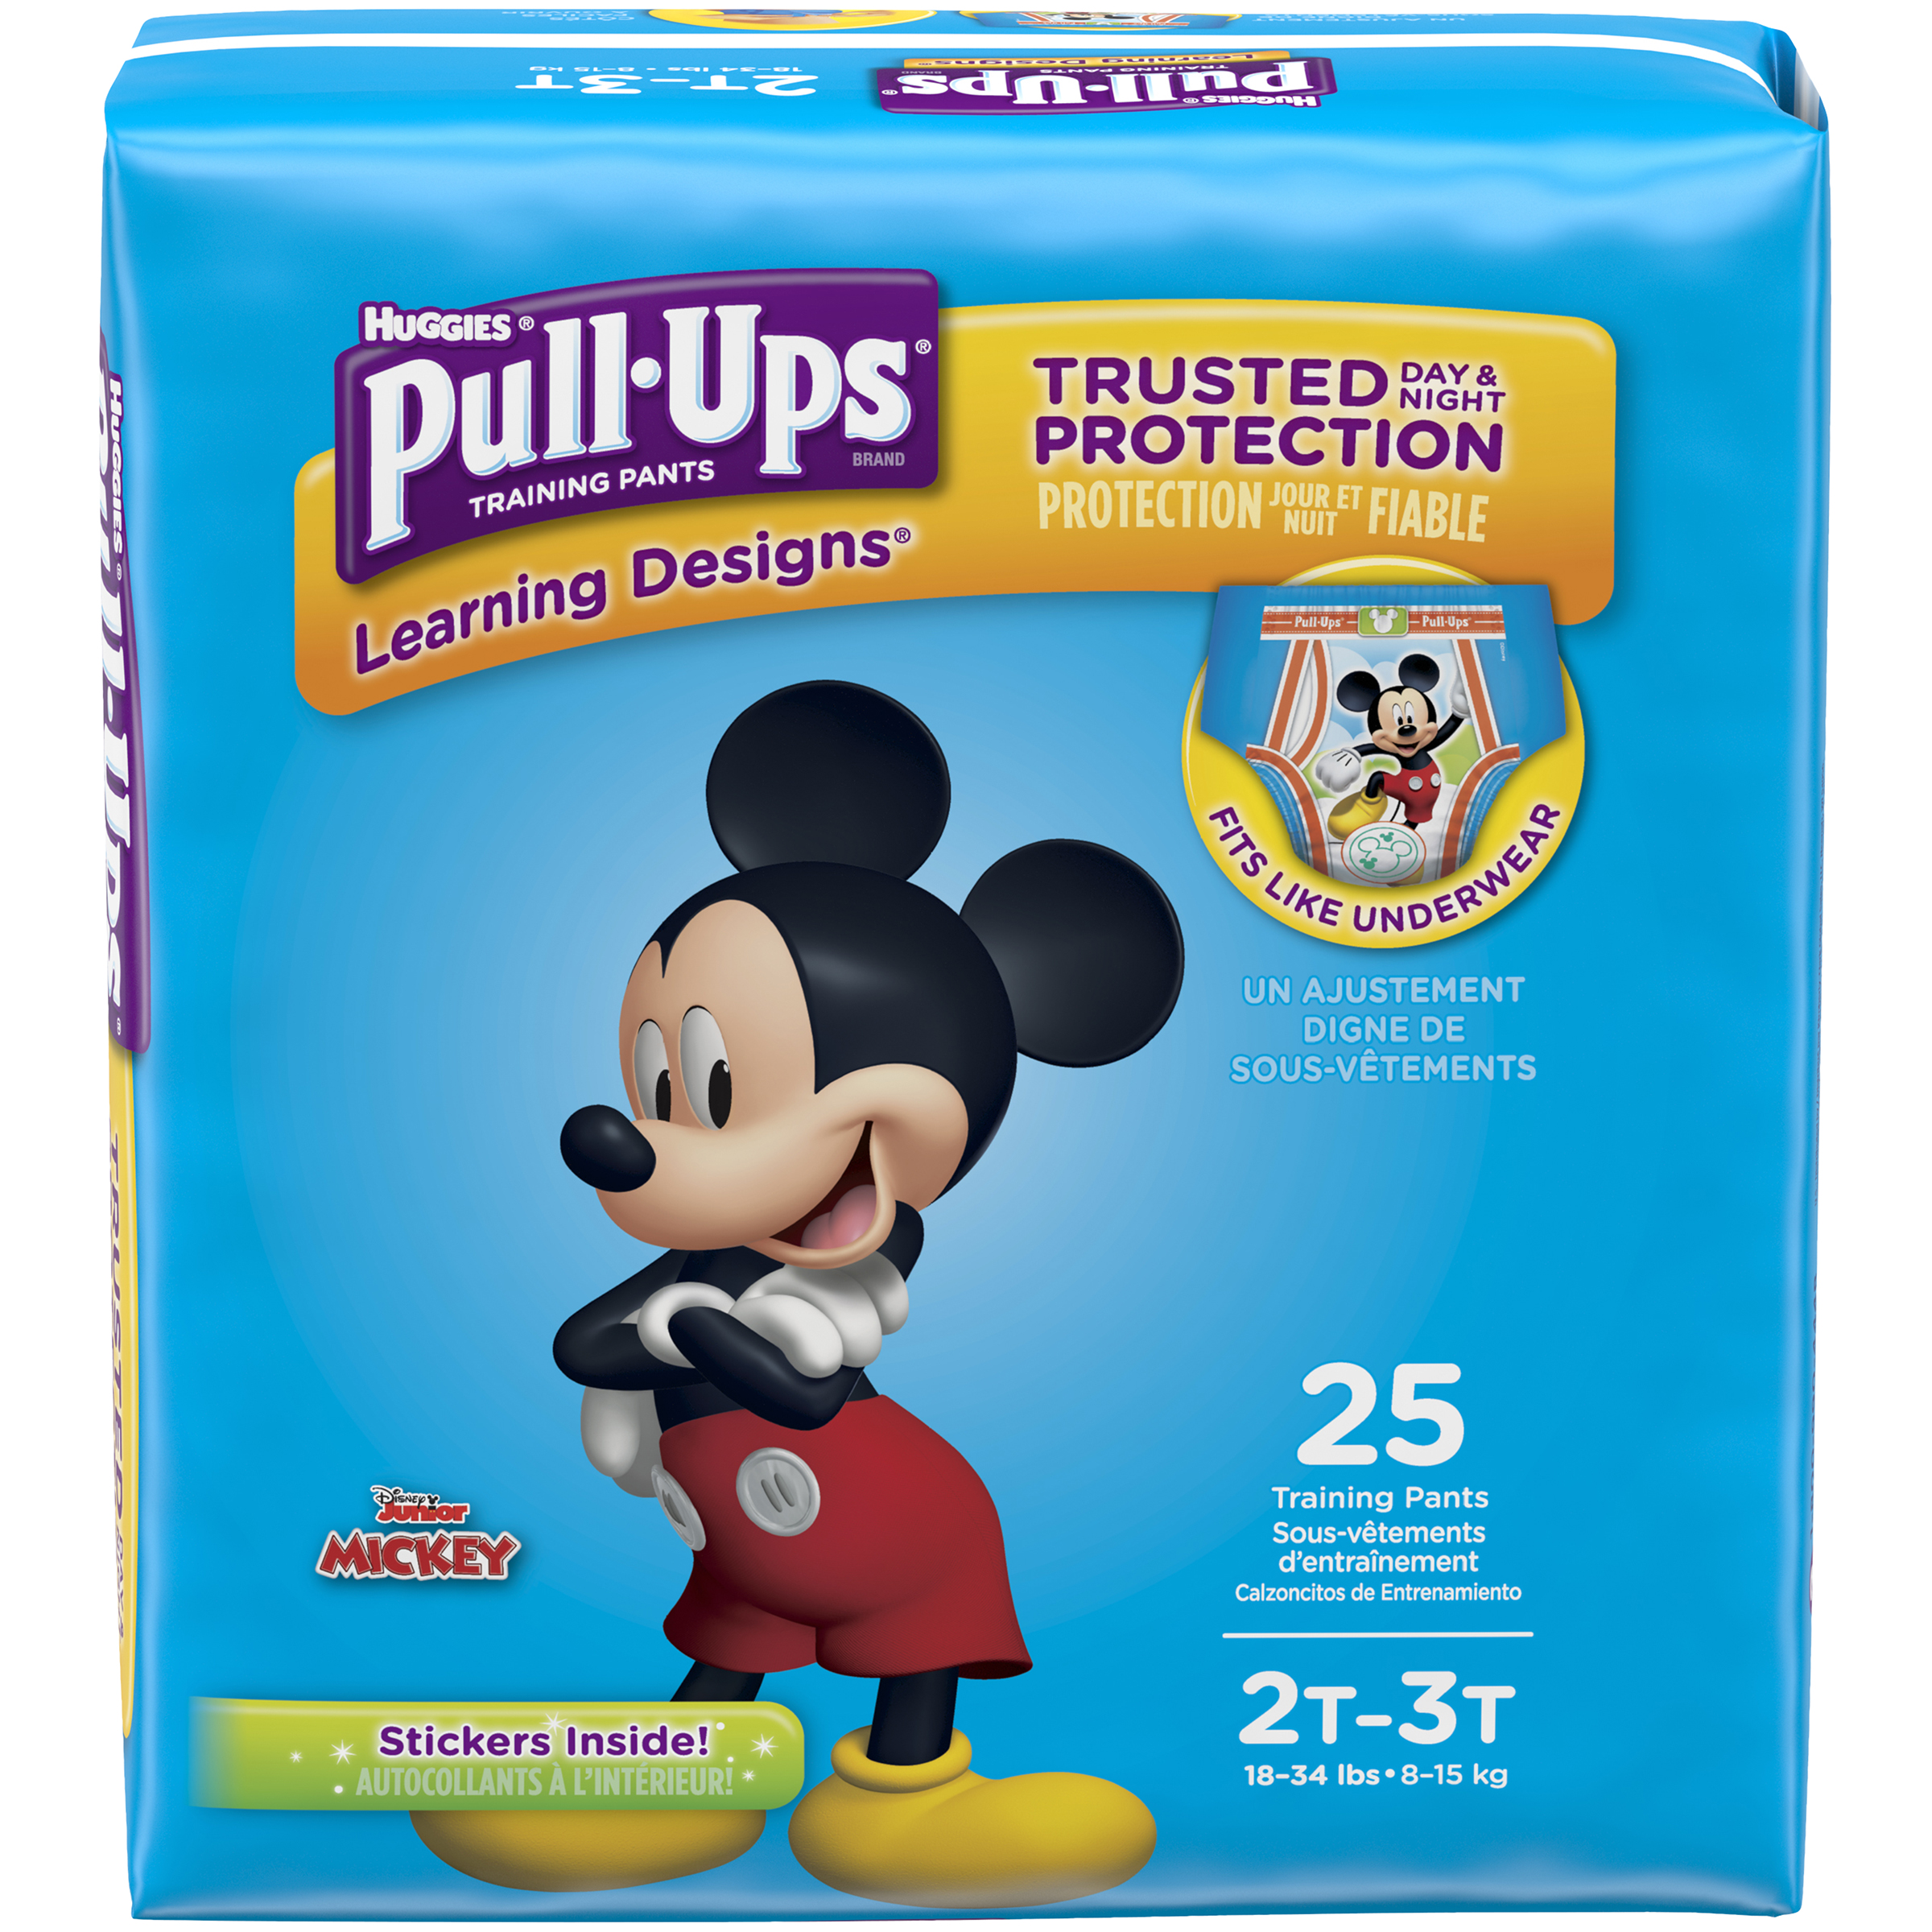 Pull-Ups Learning Designs Training Pants Boy Jumbo Pack - Various Sizes